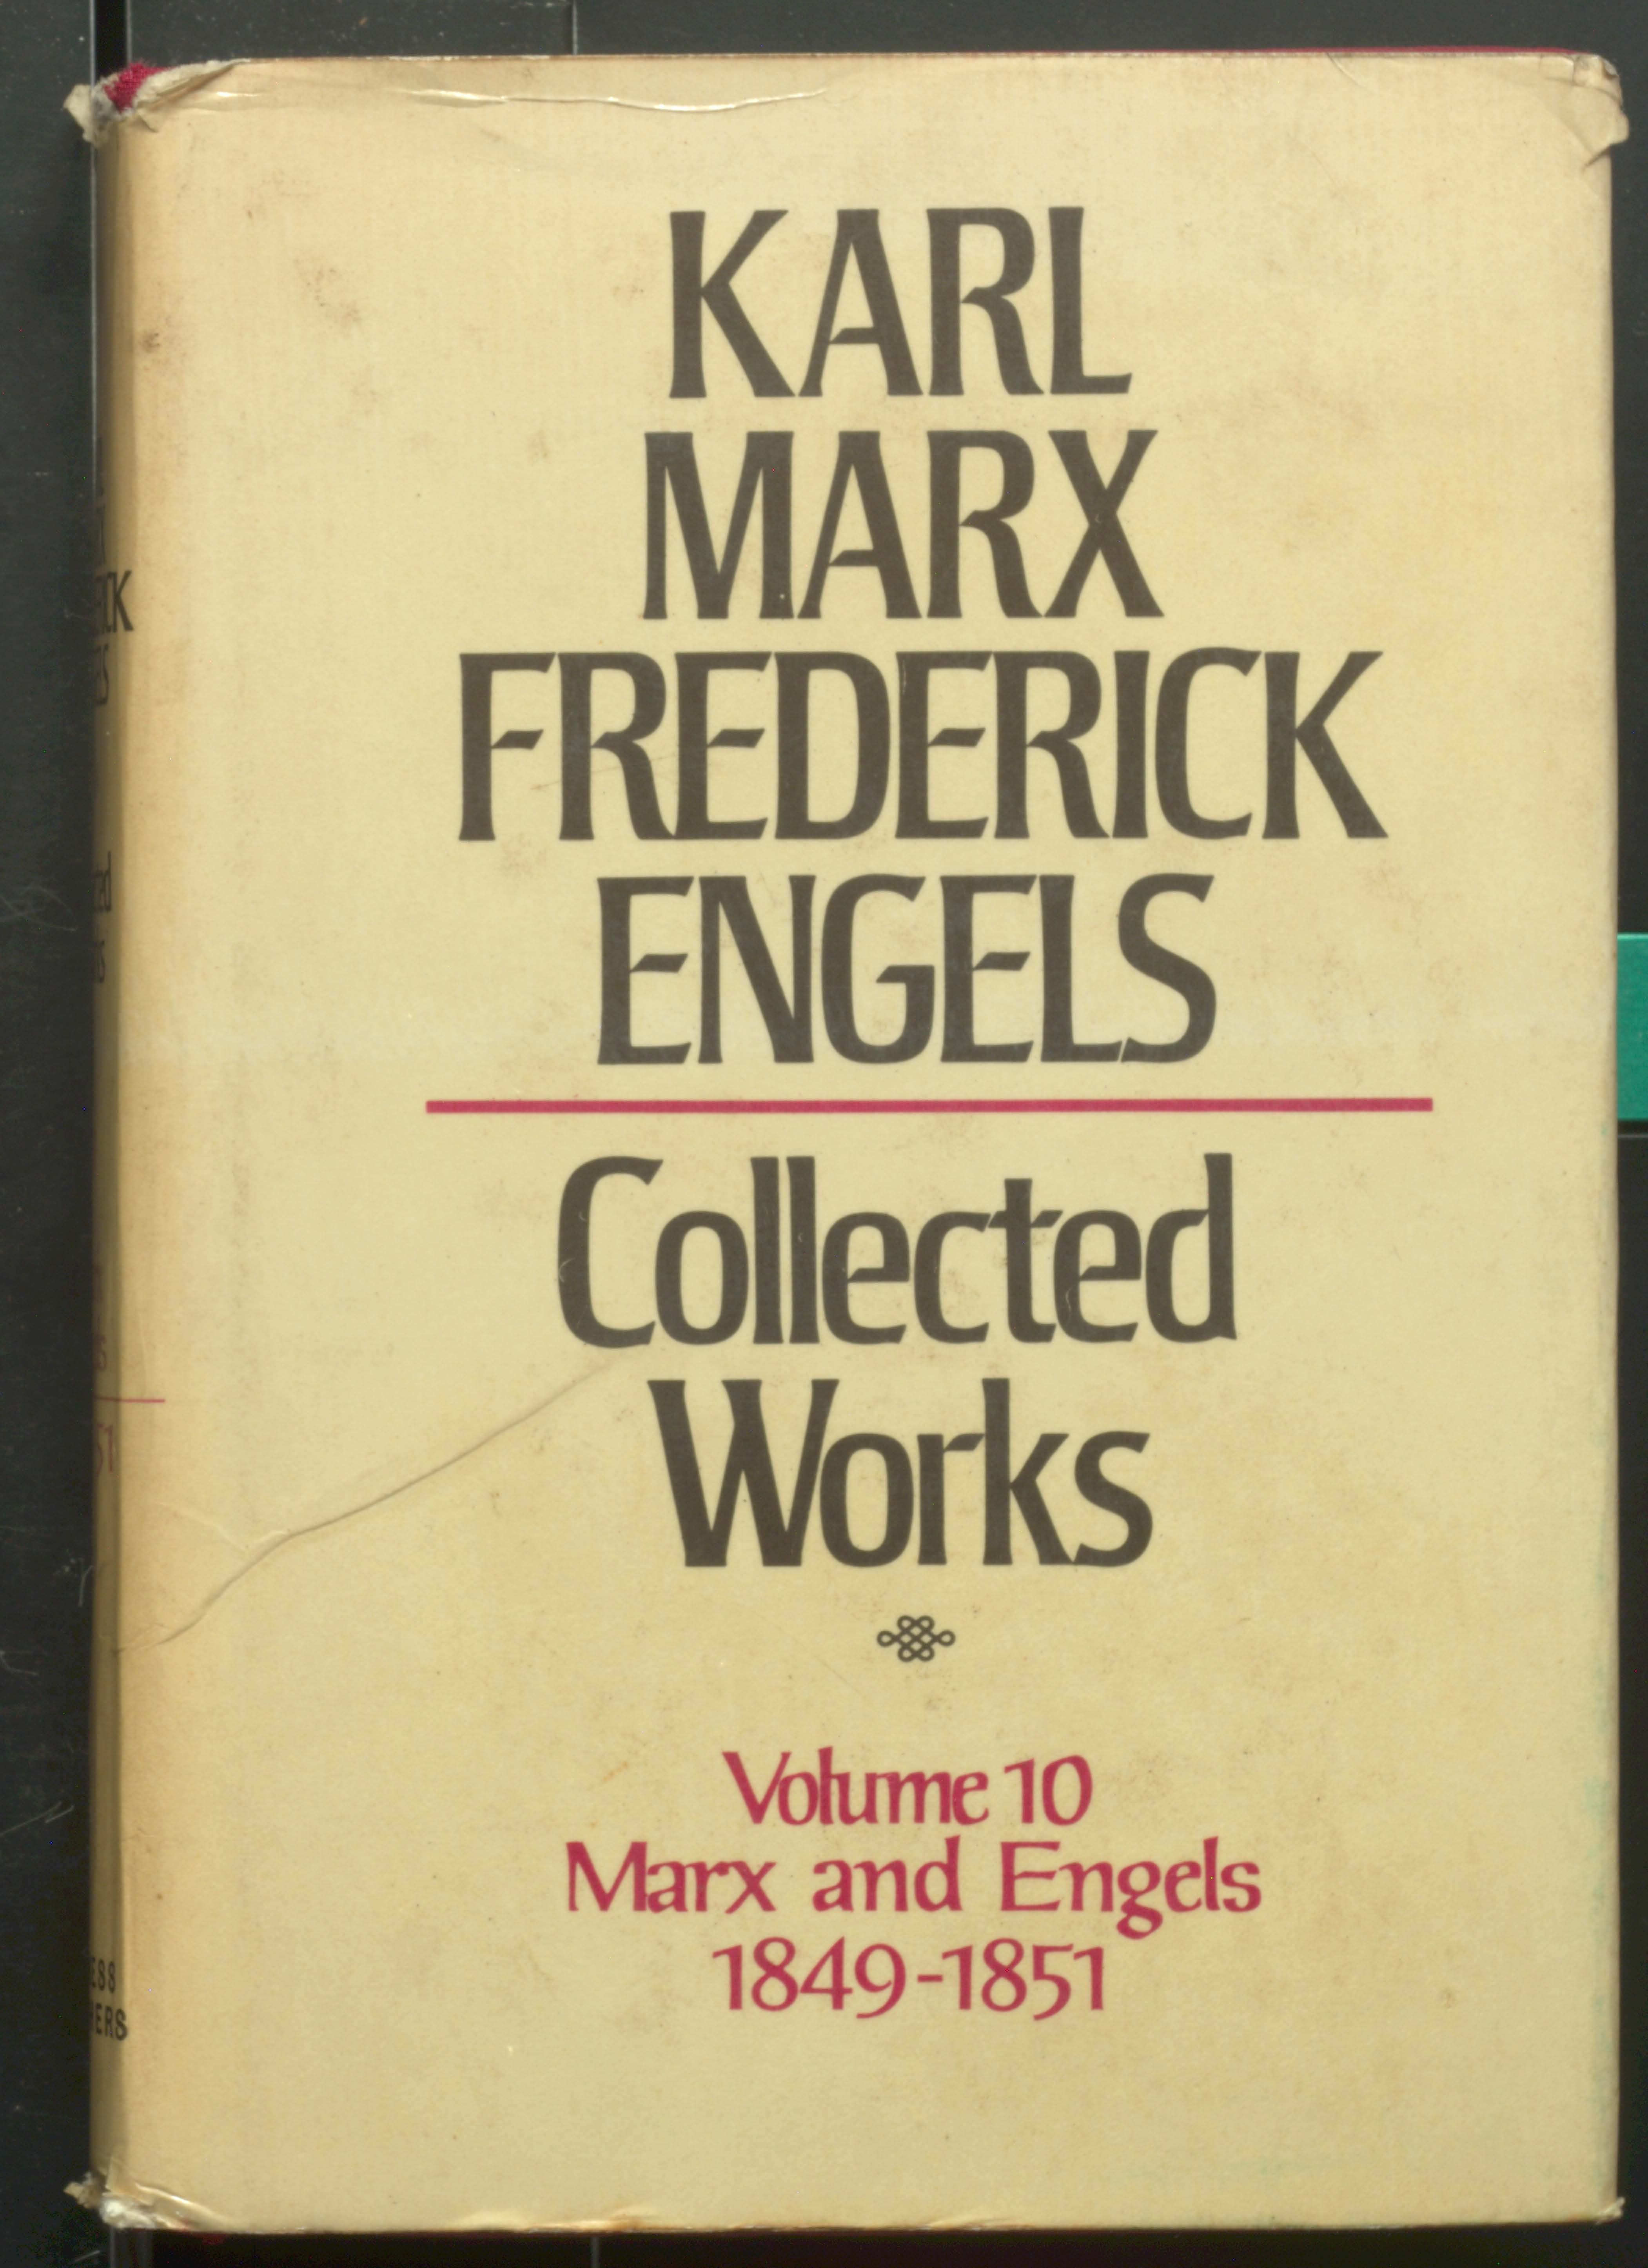 Karl Marx Frederick Engels Collected Works [Vol-10 1849-1851]